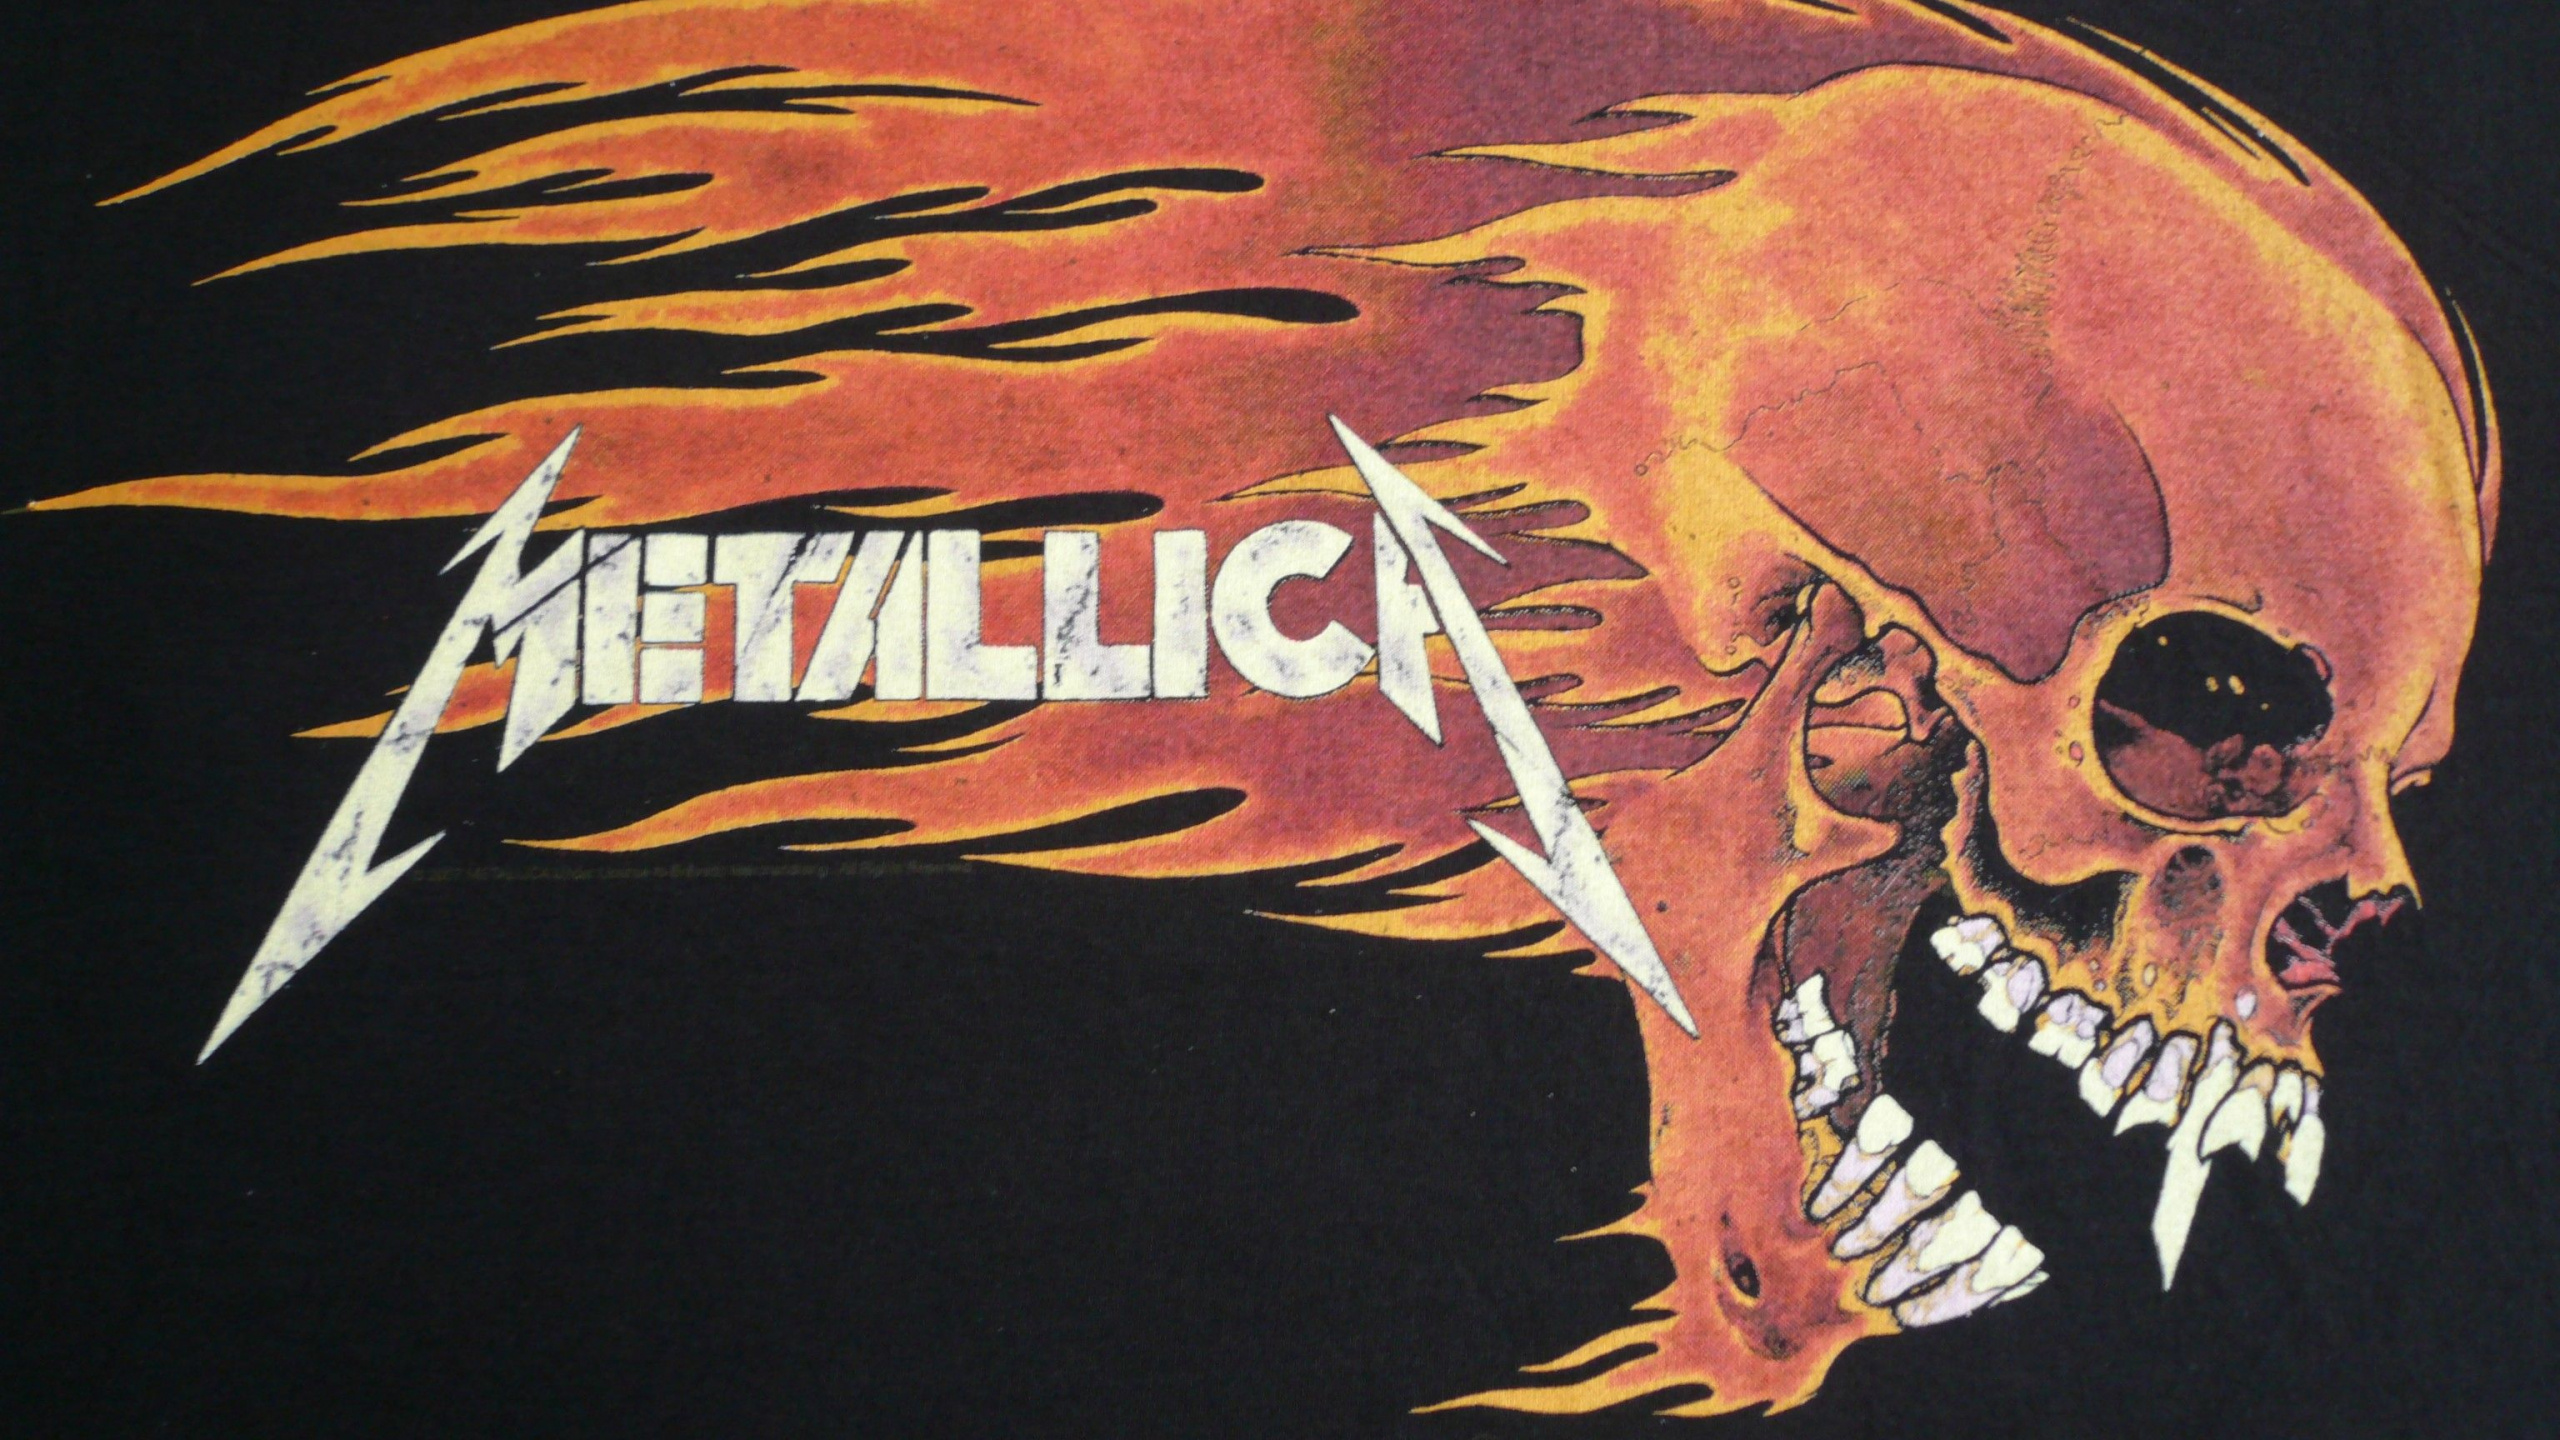 Metallica, Shirt, Schwermetall, Schädel, Knochen. Wallpaper in 2560x1440 Resolution